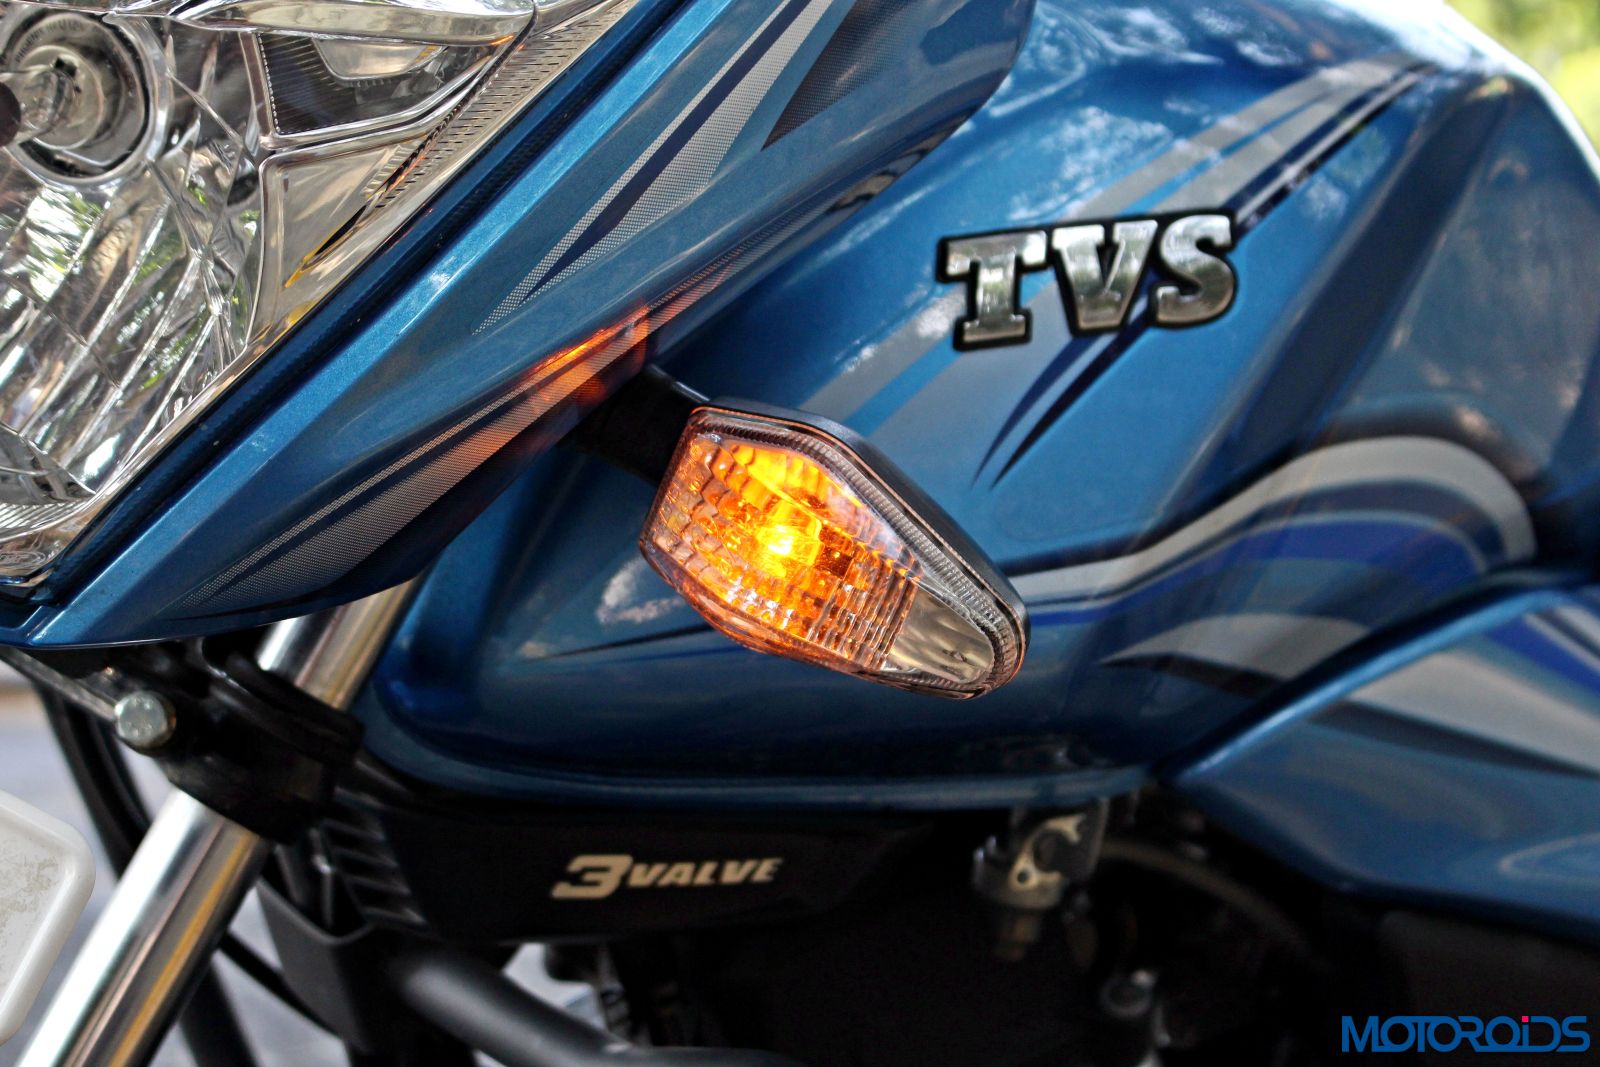 2016 TVS Victor indicator